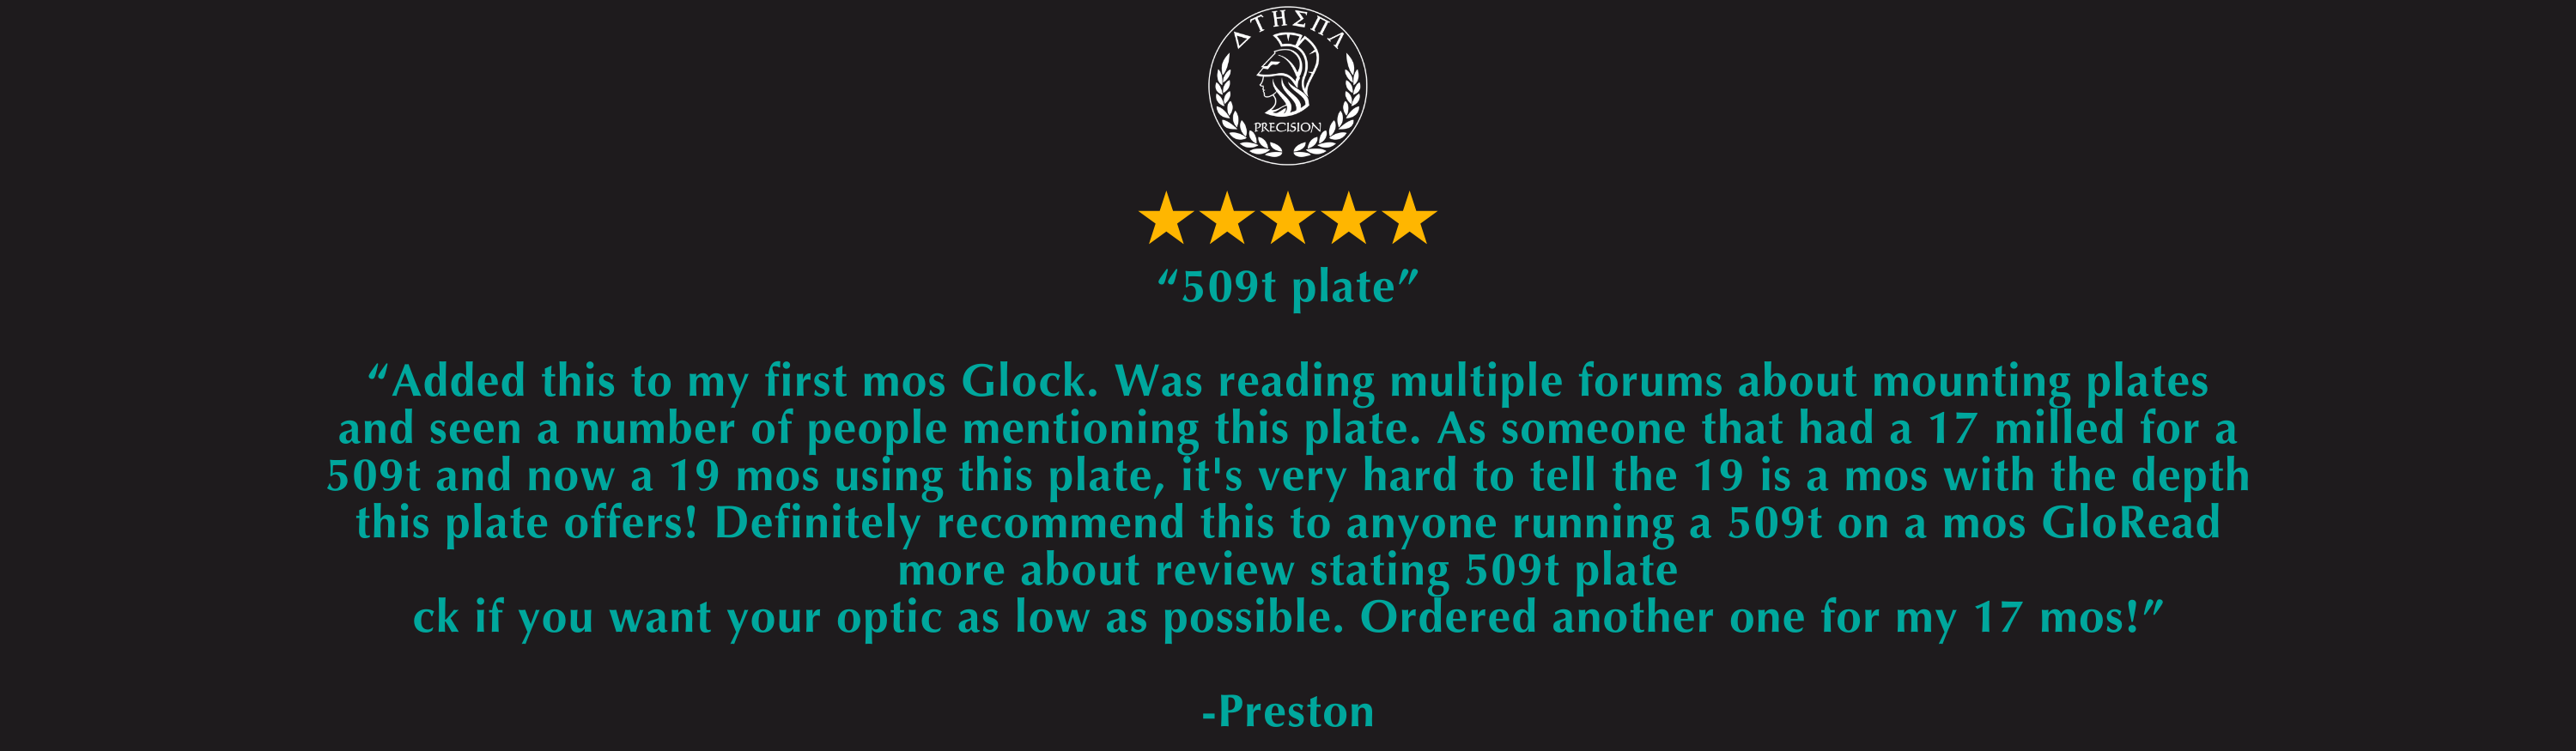 Preston Review